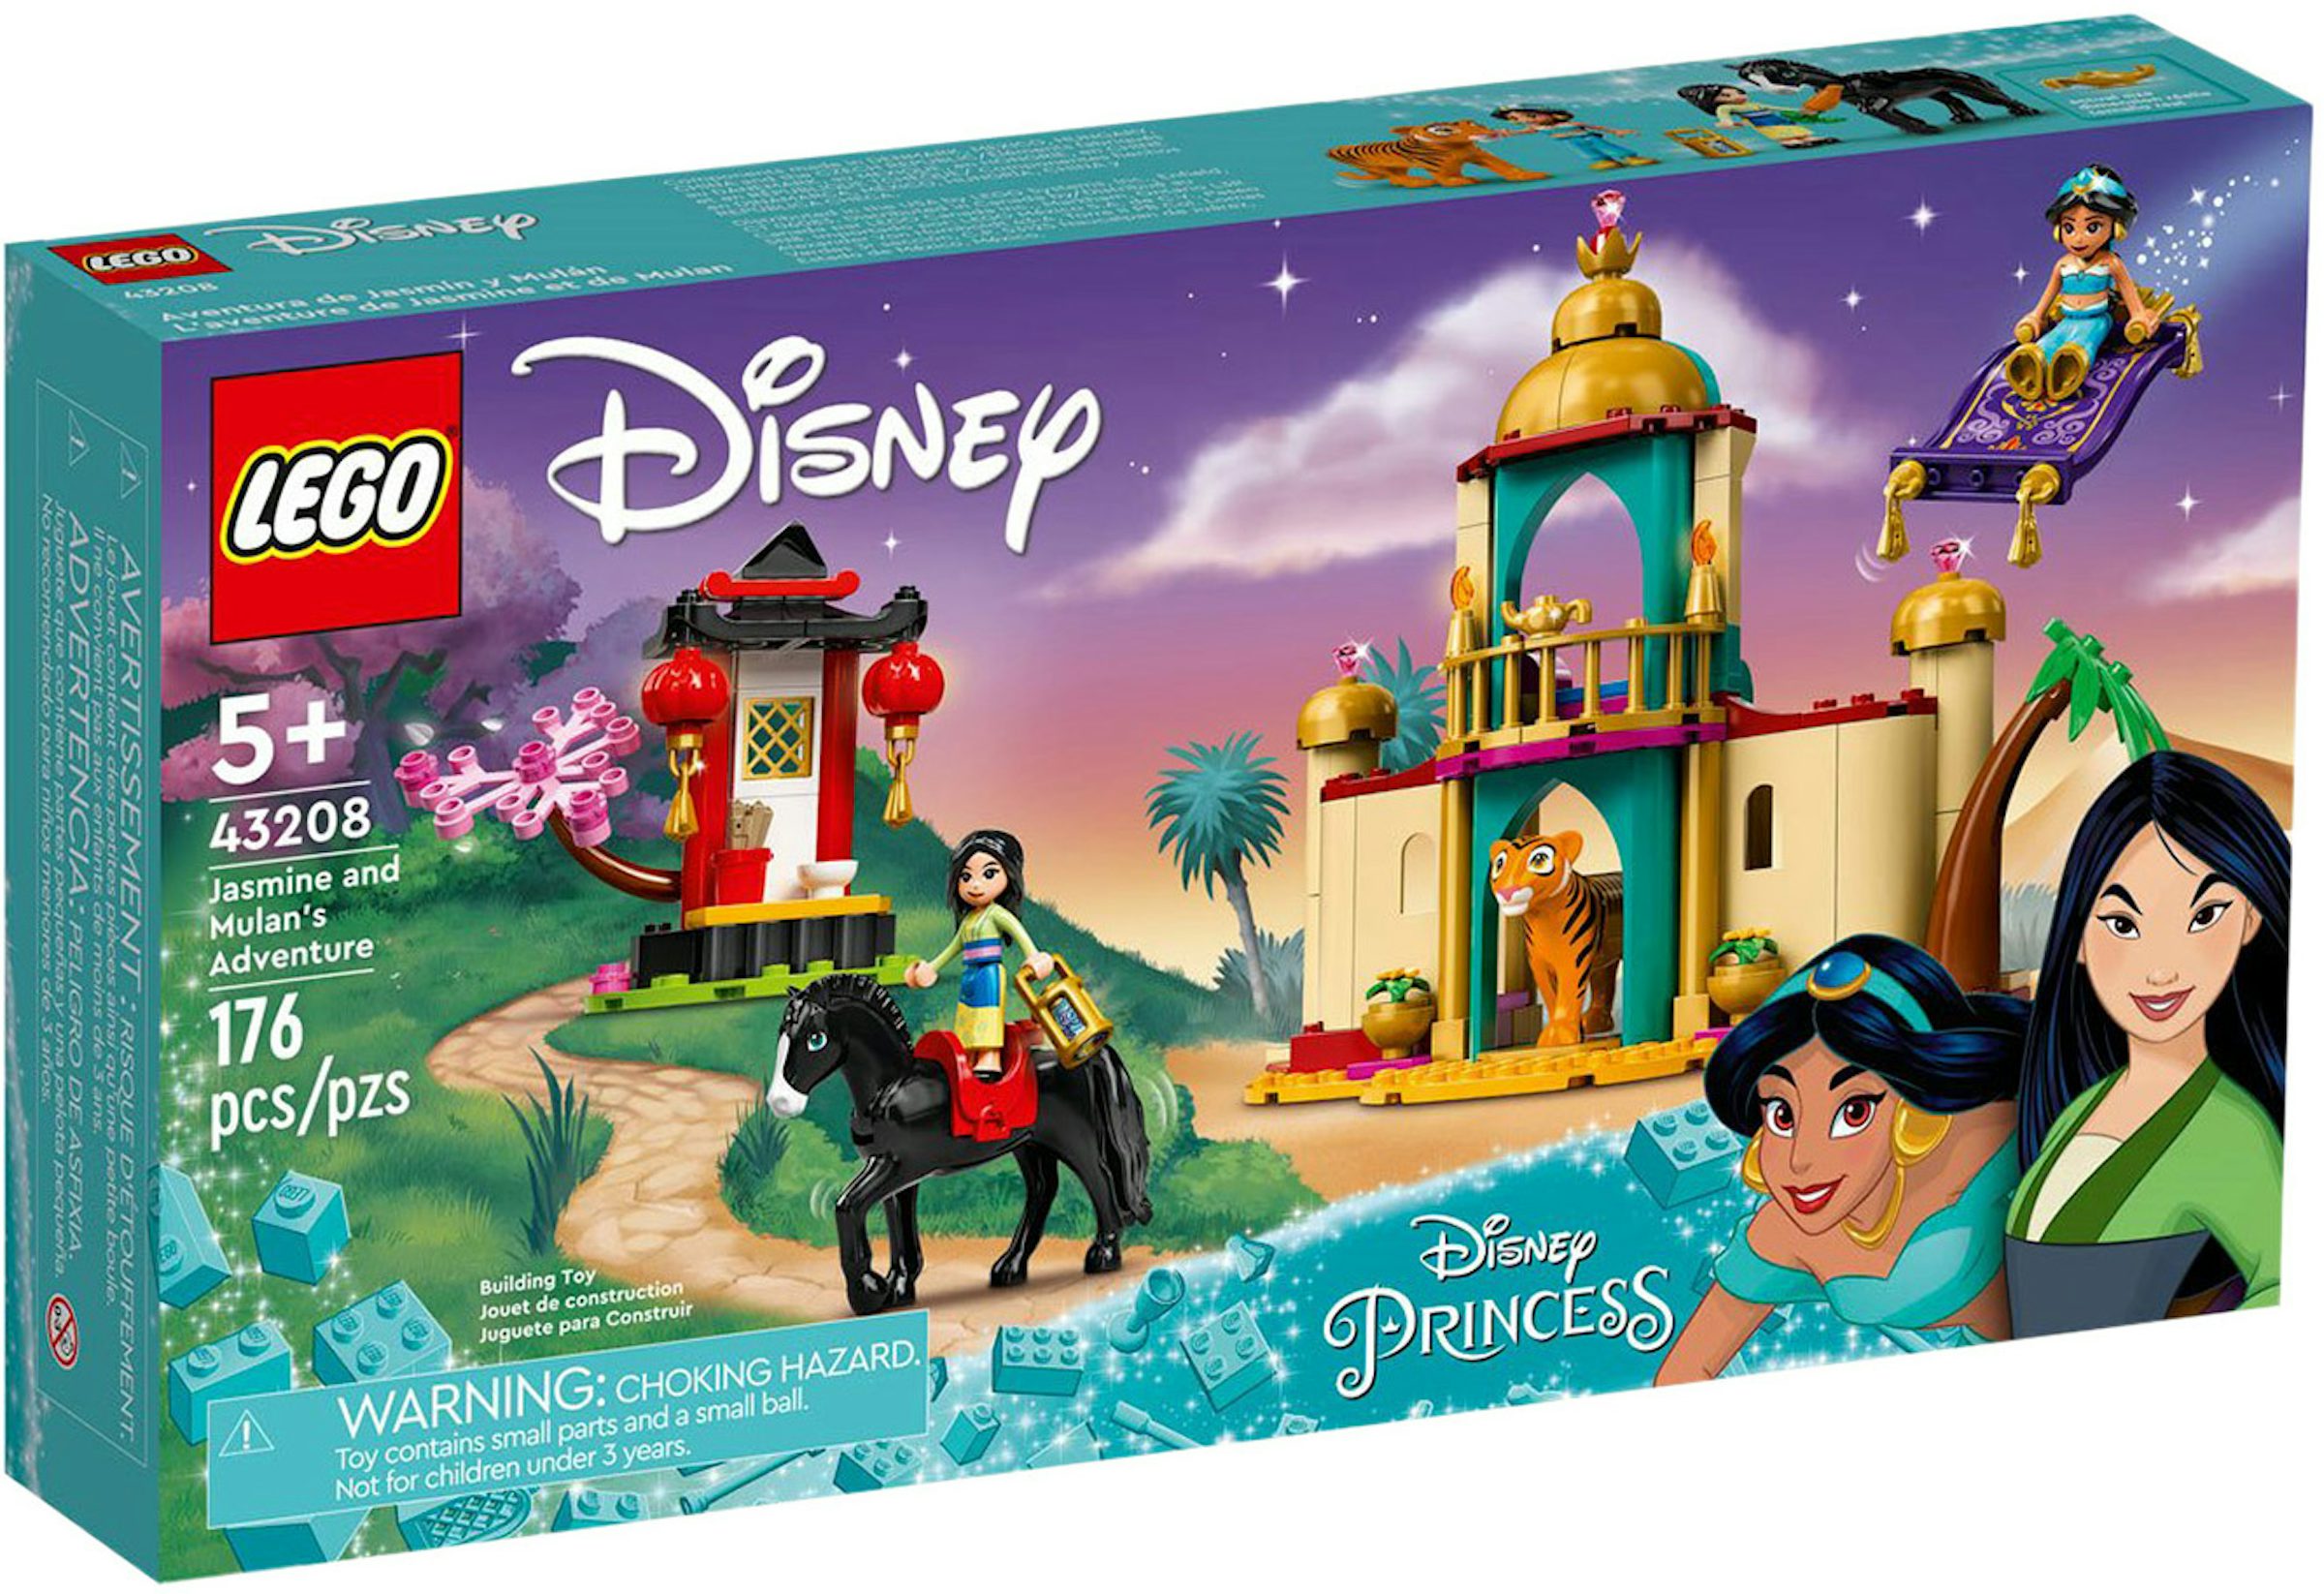 LEGO Disney Princess Jasmine and Mulan's Adventure Set 43208 - SS22 - IT